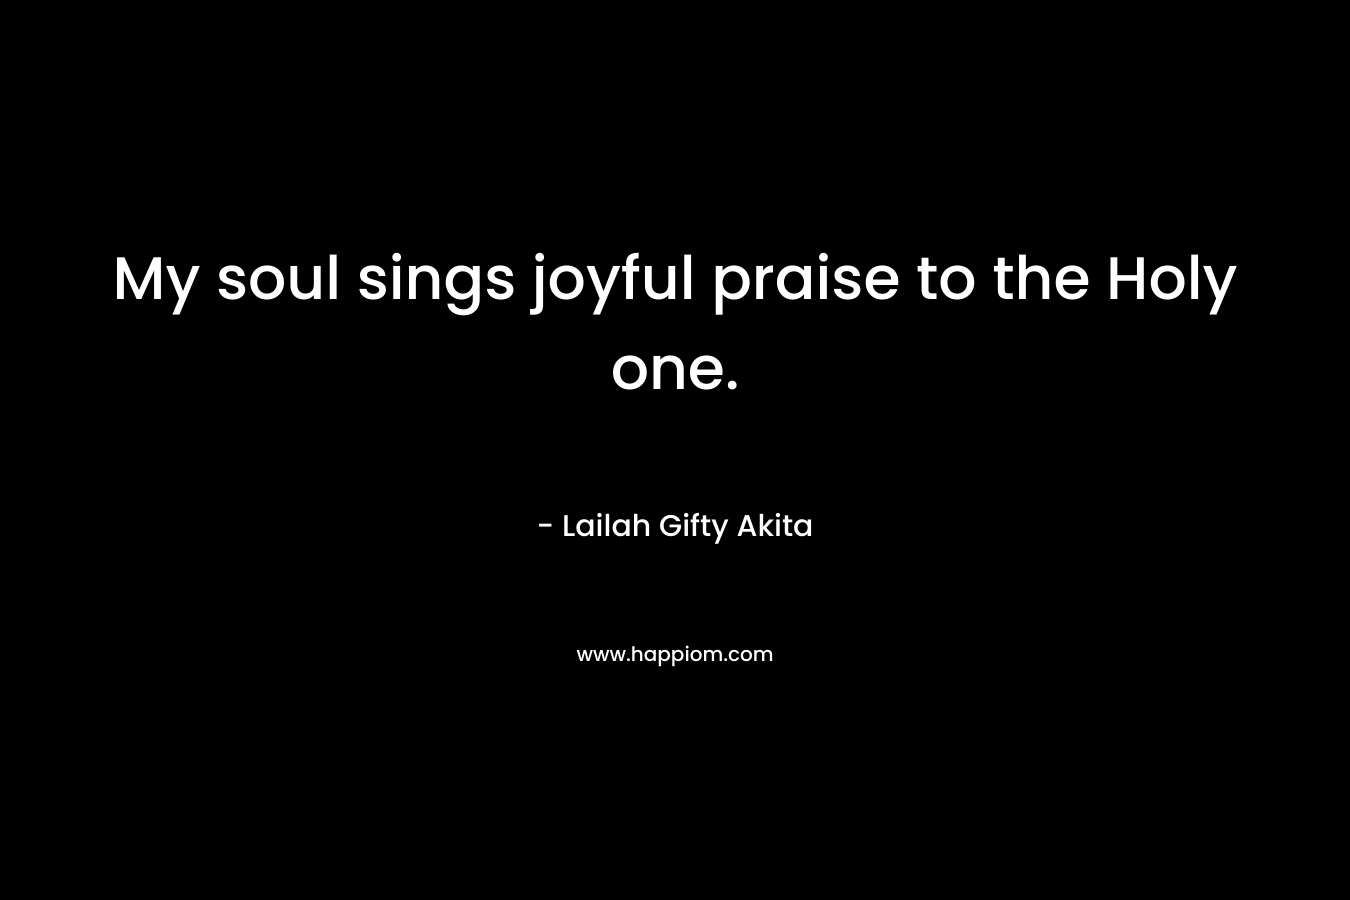 My soul sings joyful praise to the Holy one.